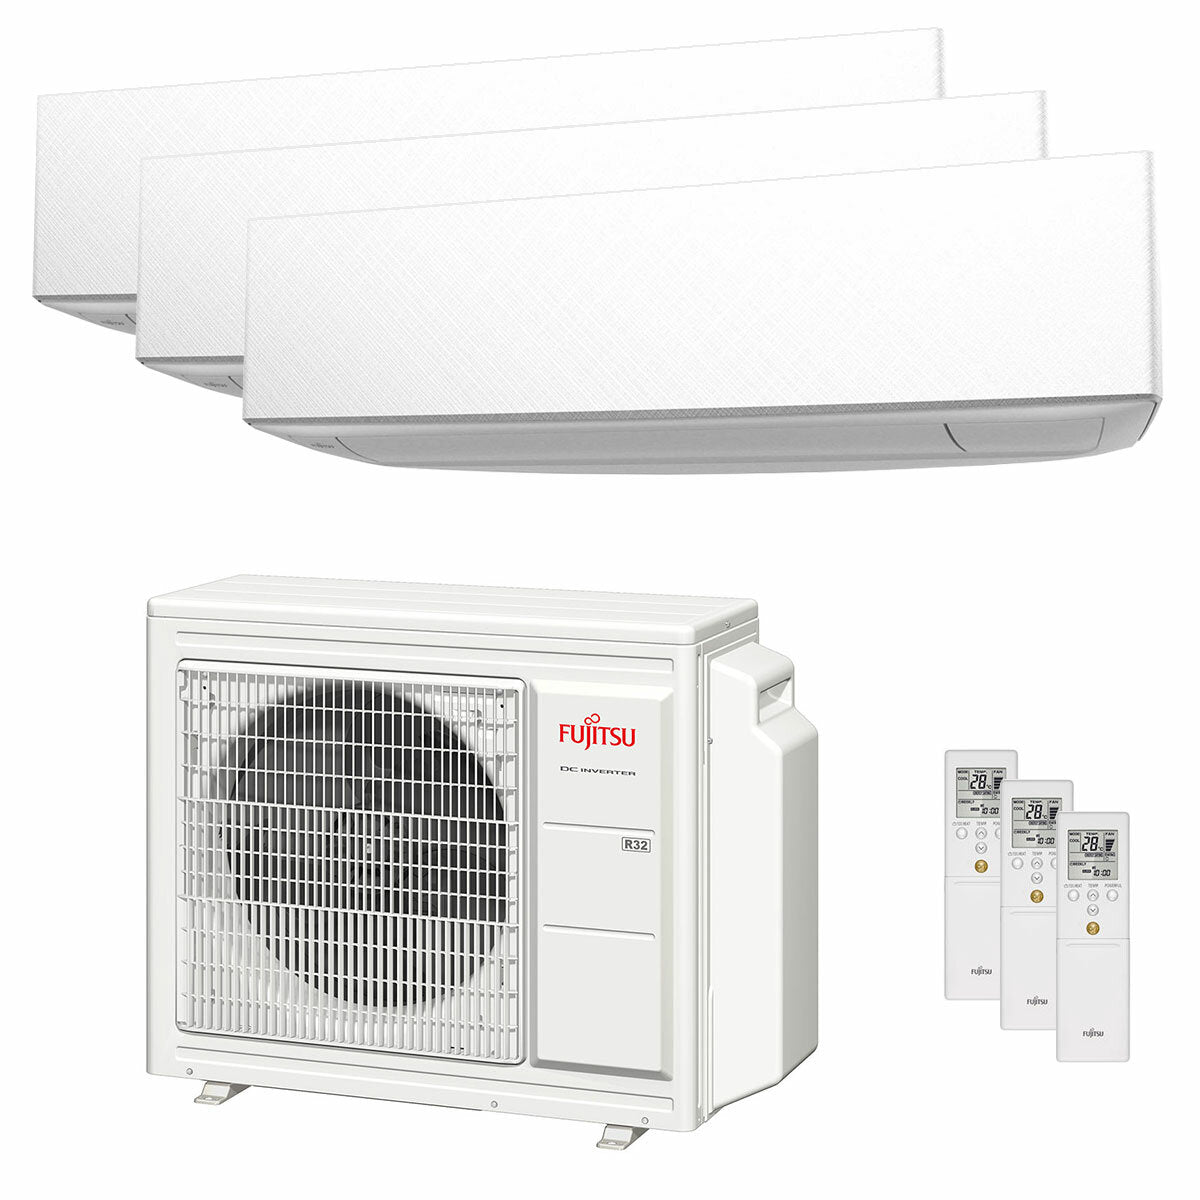 Fujitsu KE WiFi Series trial split air conditioner 7000+7000+7000 BTU inverter A+++ wifi external unit 5.4 kW